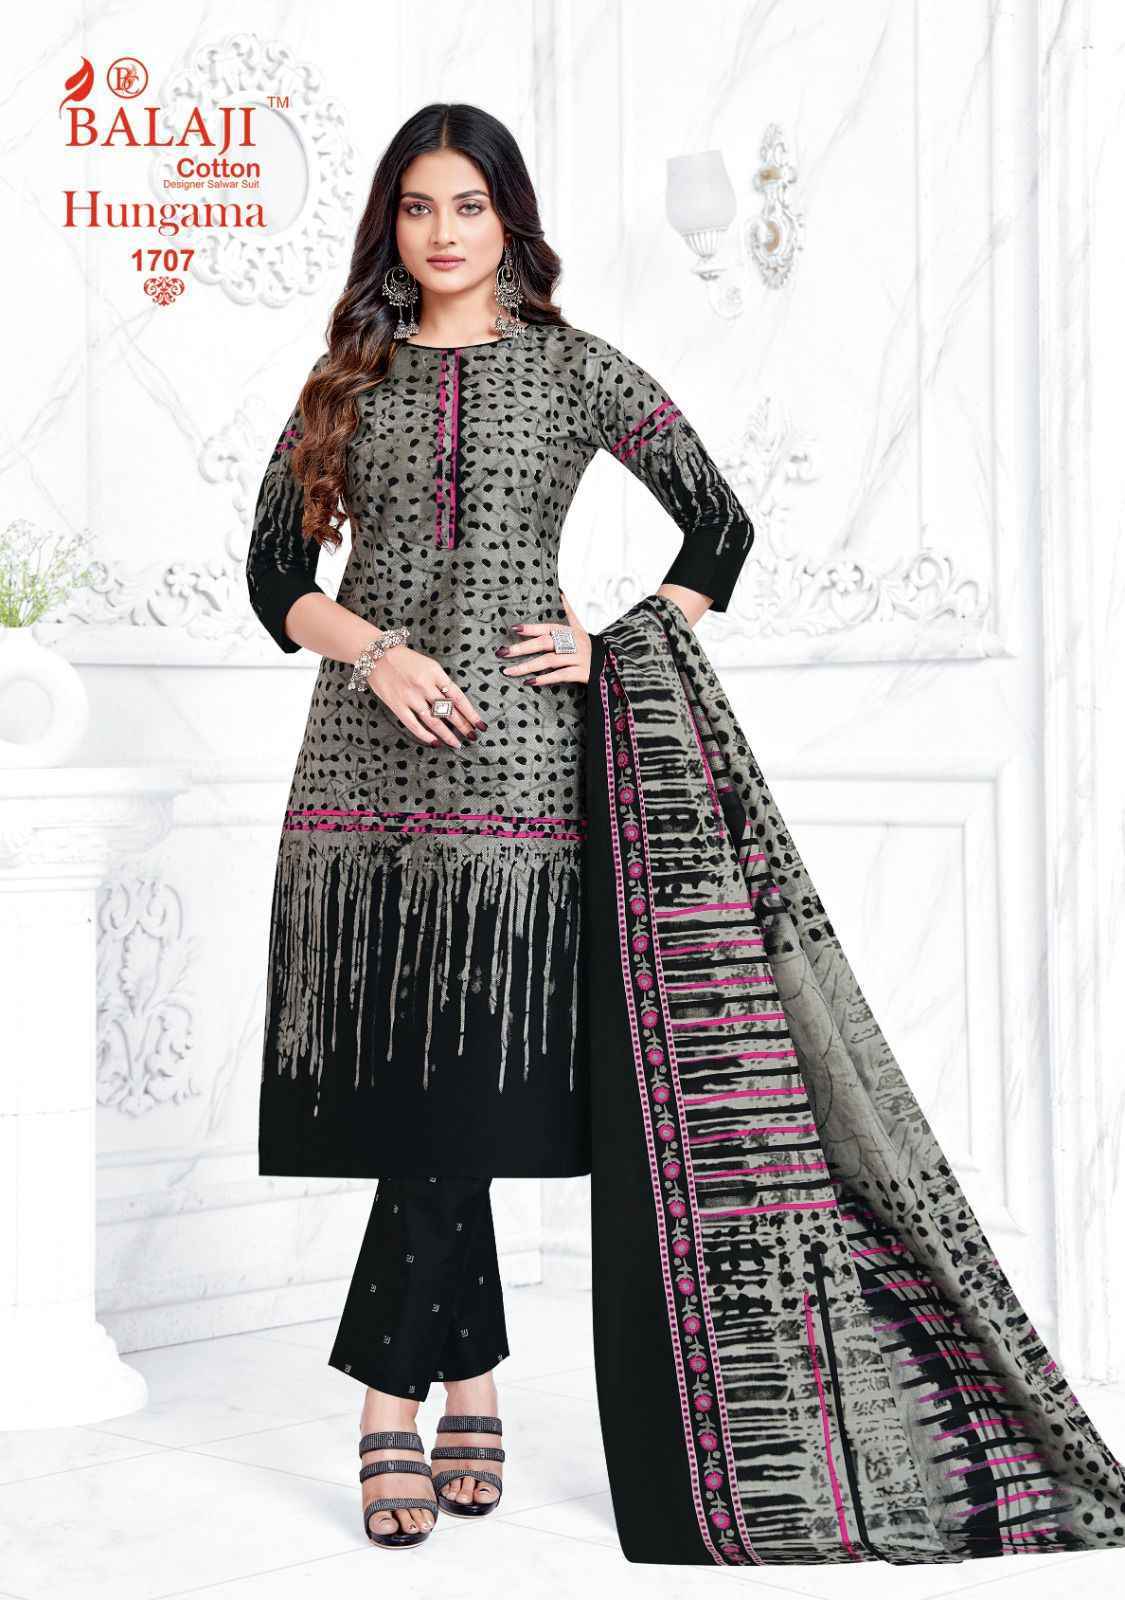 Balaji Hangama Vol 17 Cotton Dress Material 10 pcs Catalogue - Wholesale Factory Price